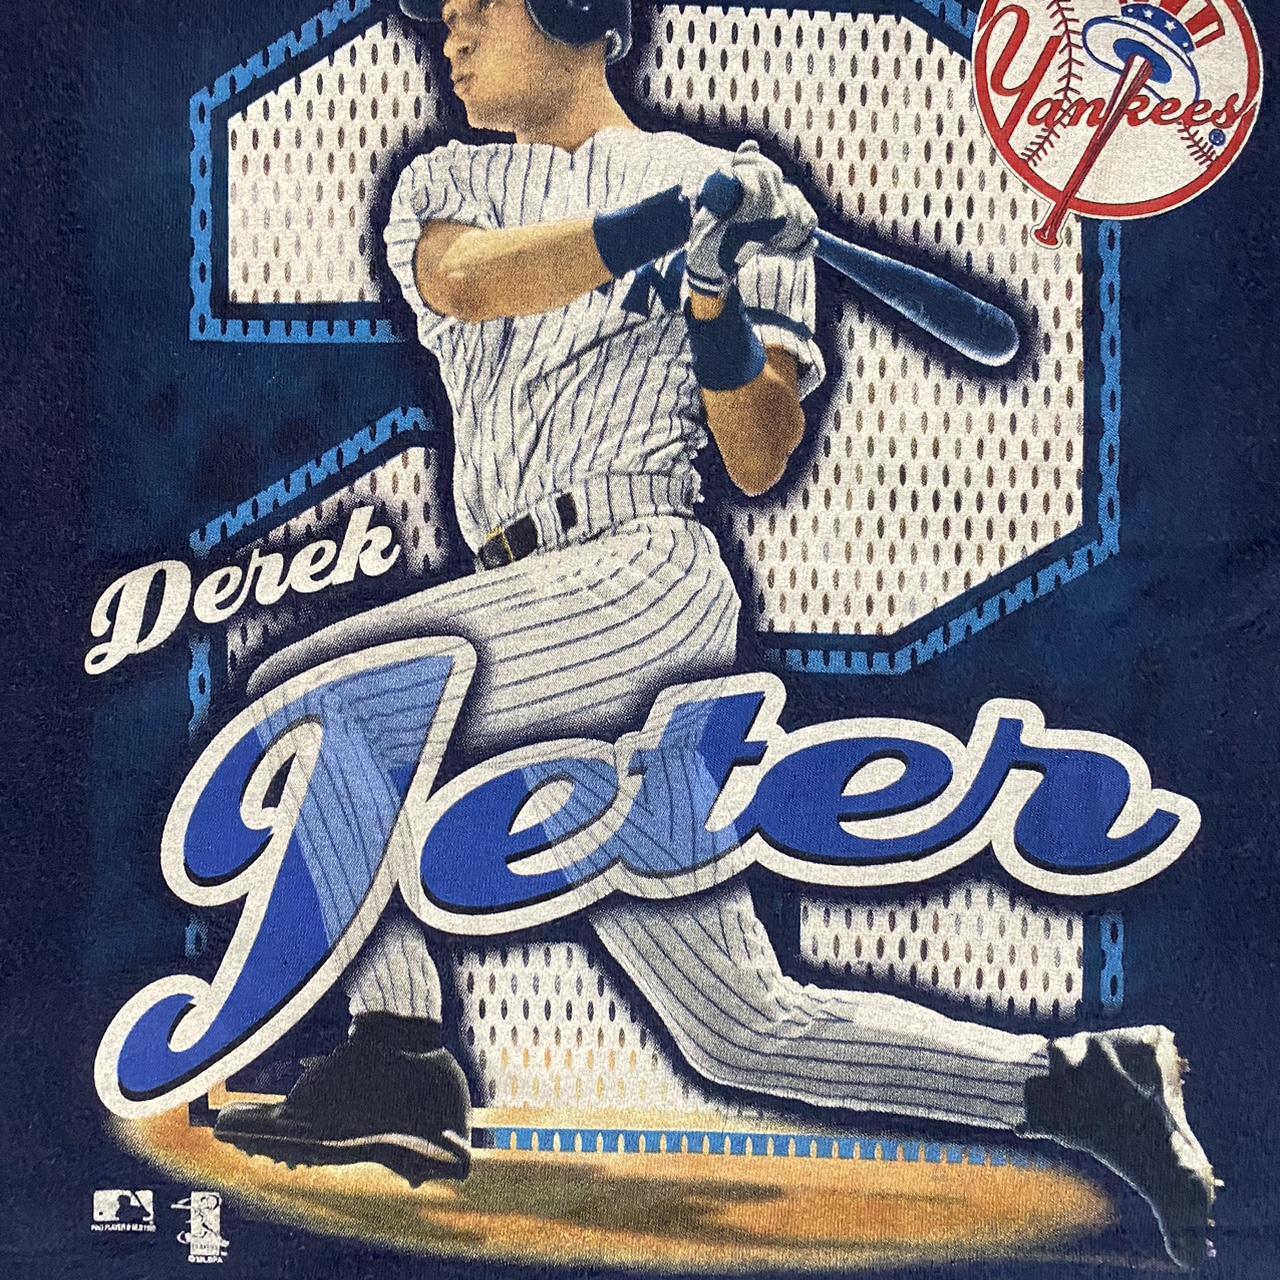 Derek Jeter 2 New York Yankees baseball player Vintage shirt